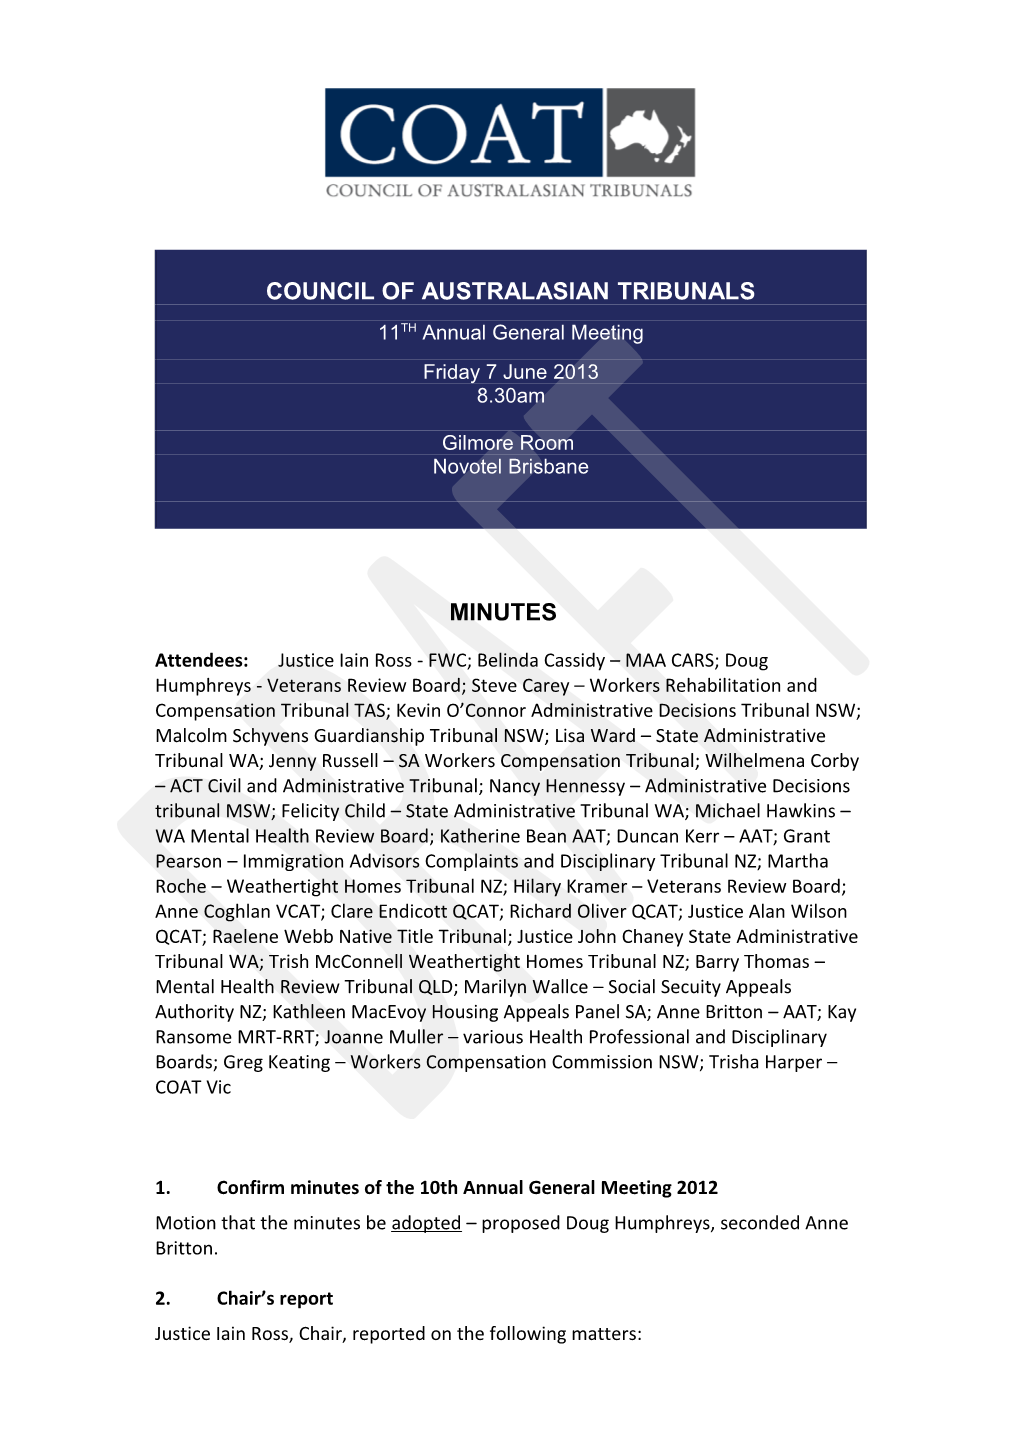 Council of Australasian Tribunals